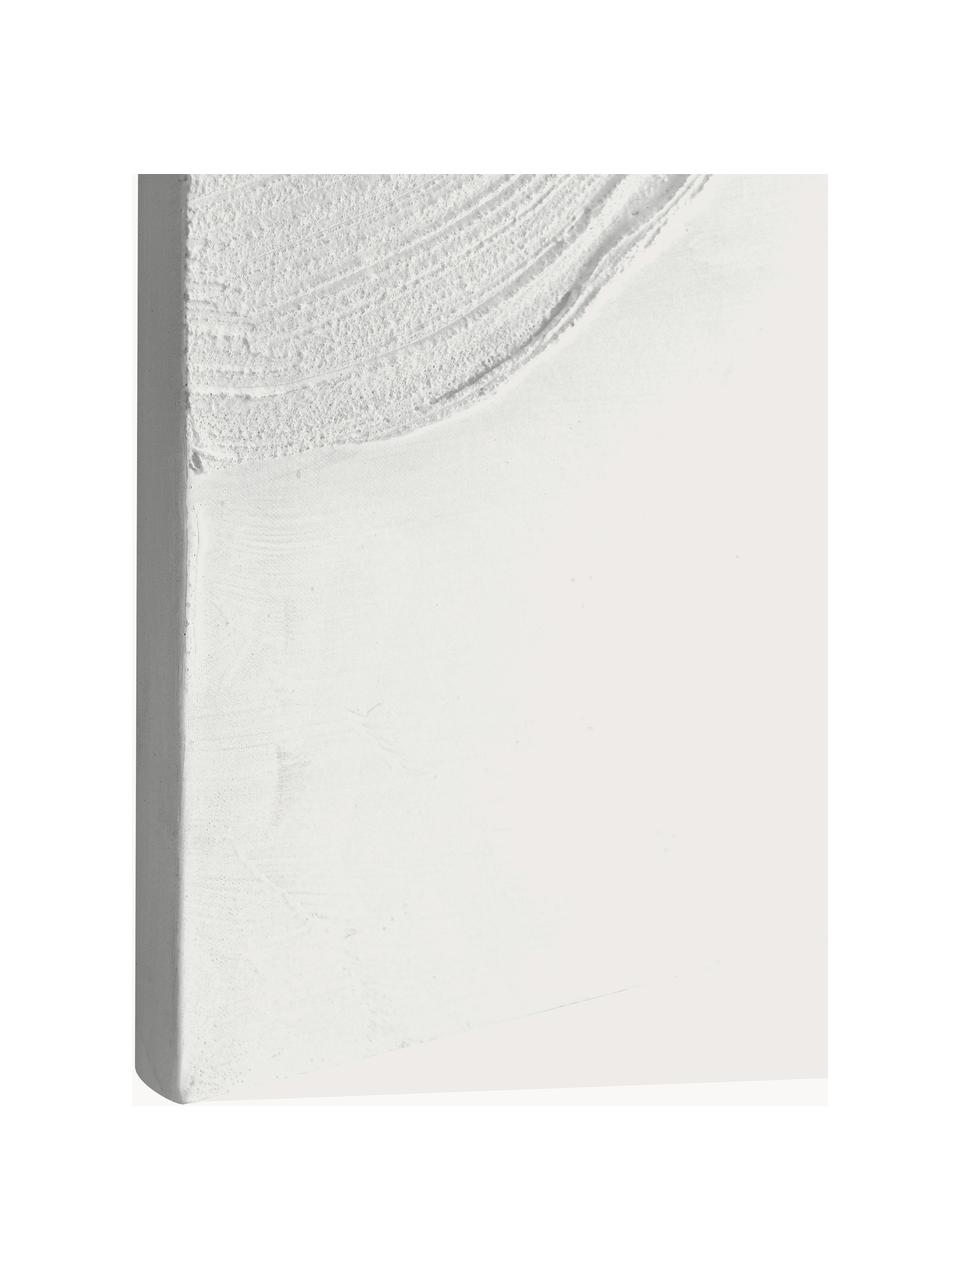 Leinwandbild Texture, Bild: Flachsfasern, Weiss, B 140 x H 70 cm